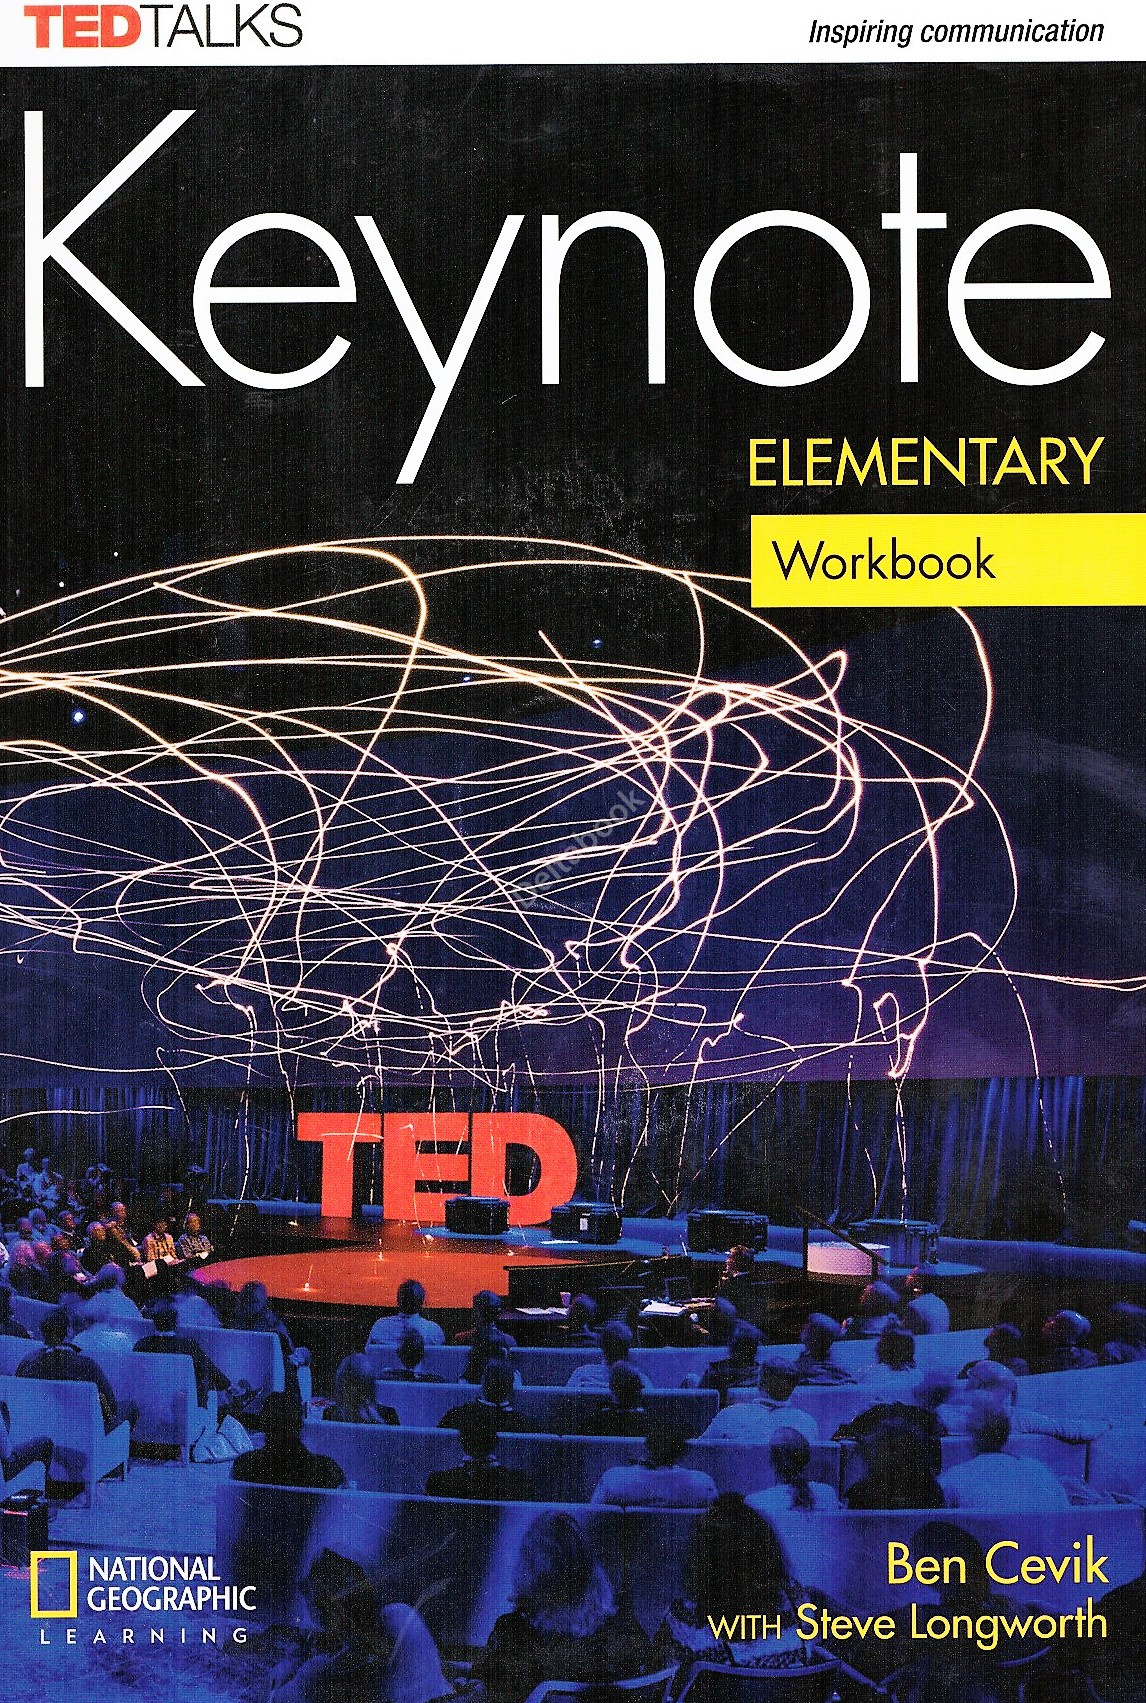 KEYNOTE Elementary Workbook [with CD(x1)]